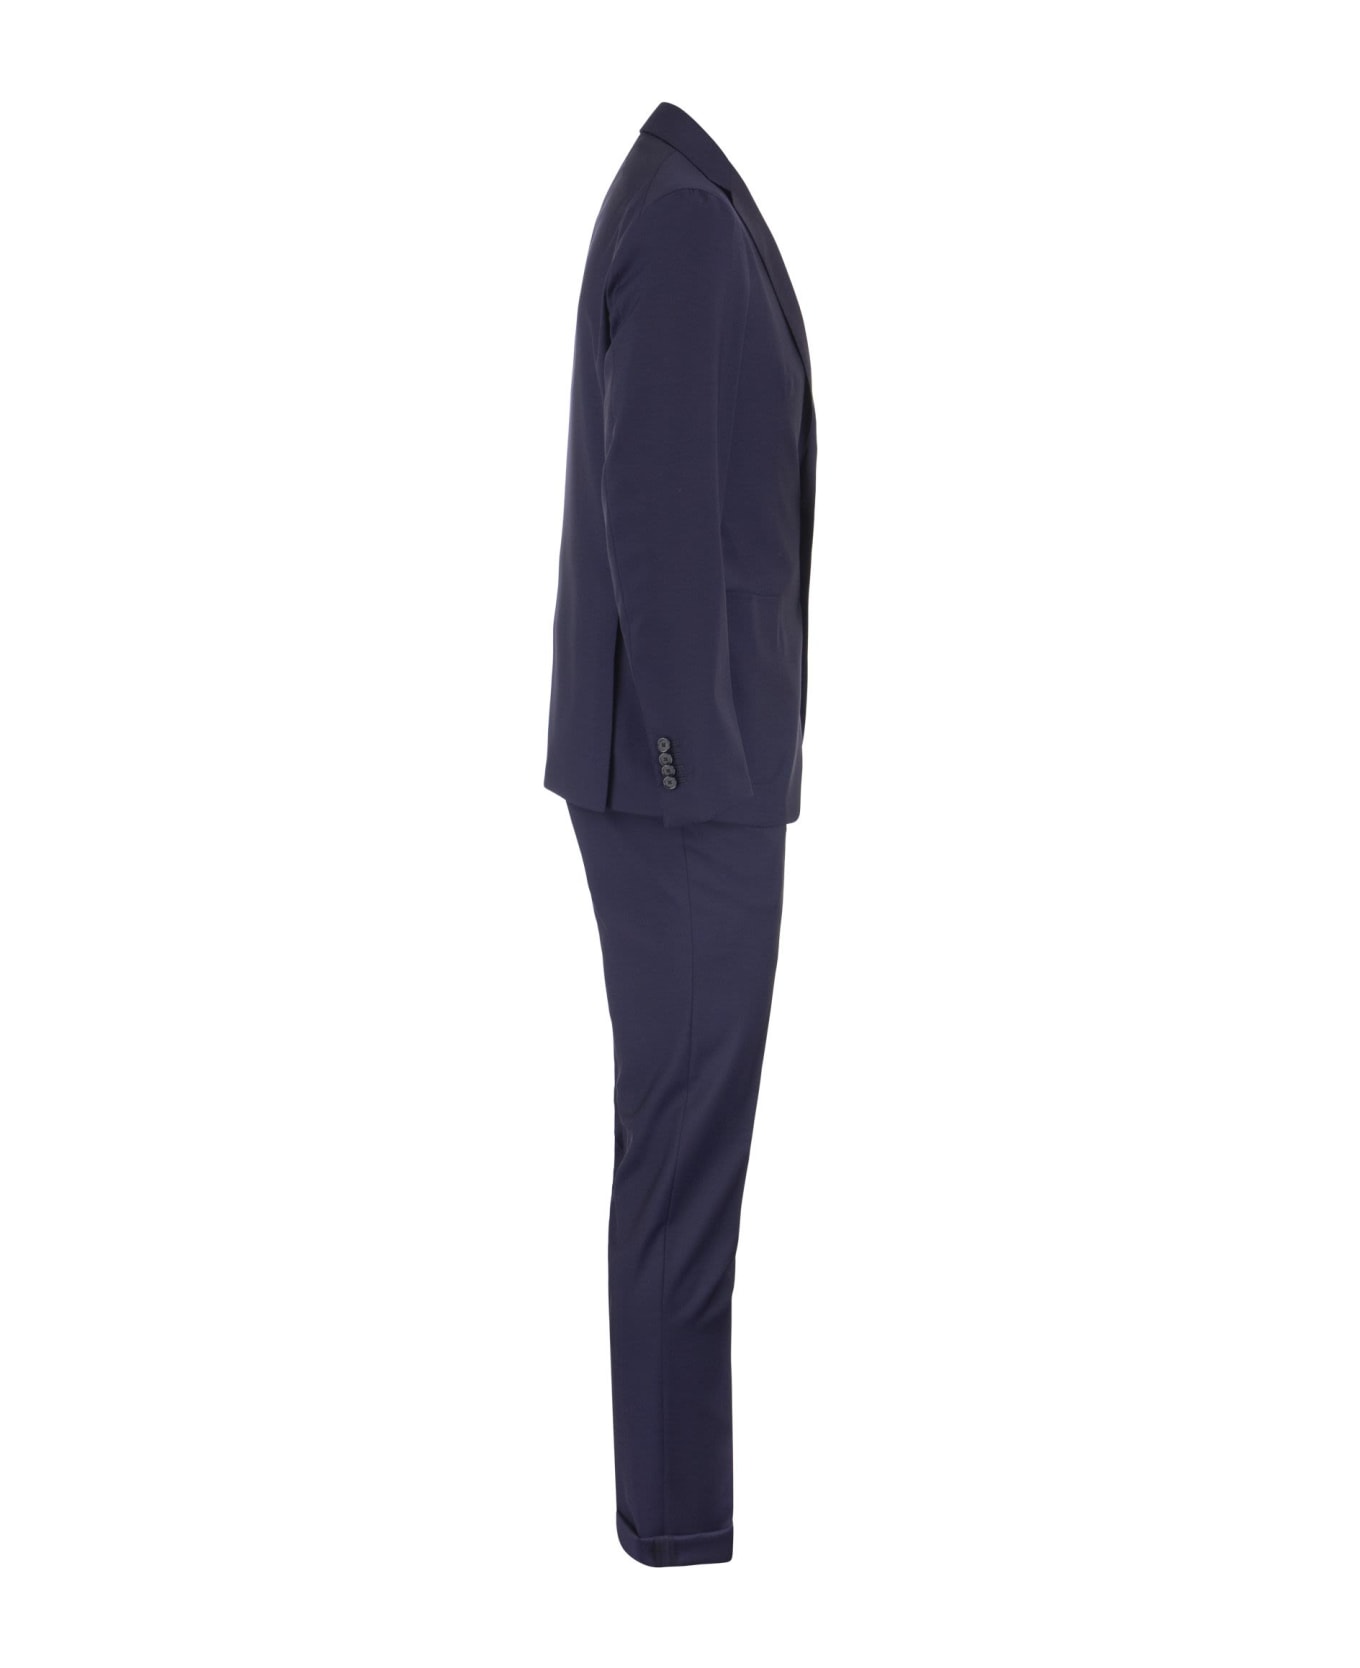 Tagliatore Wool Suit - Navy Blue スーツ